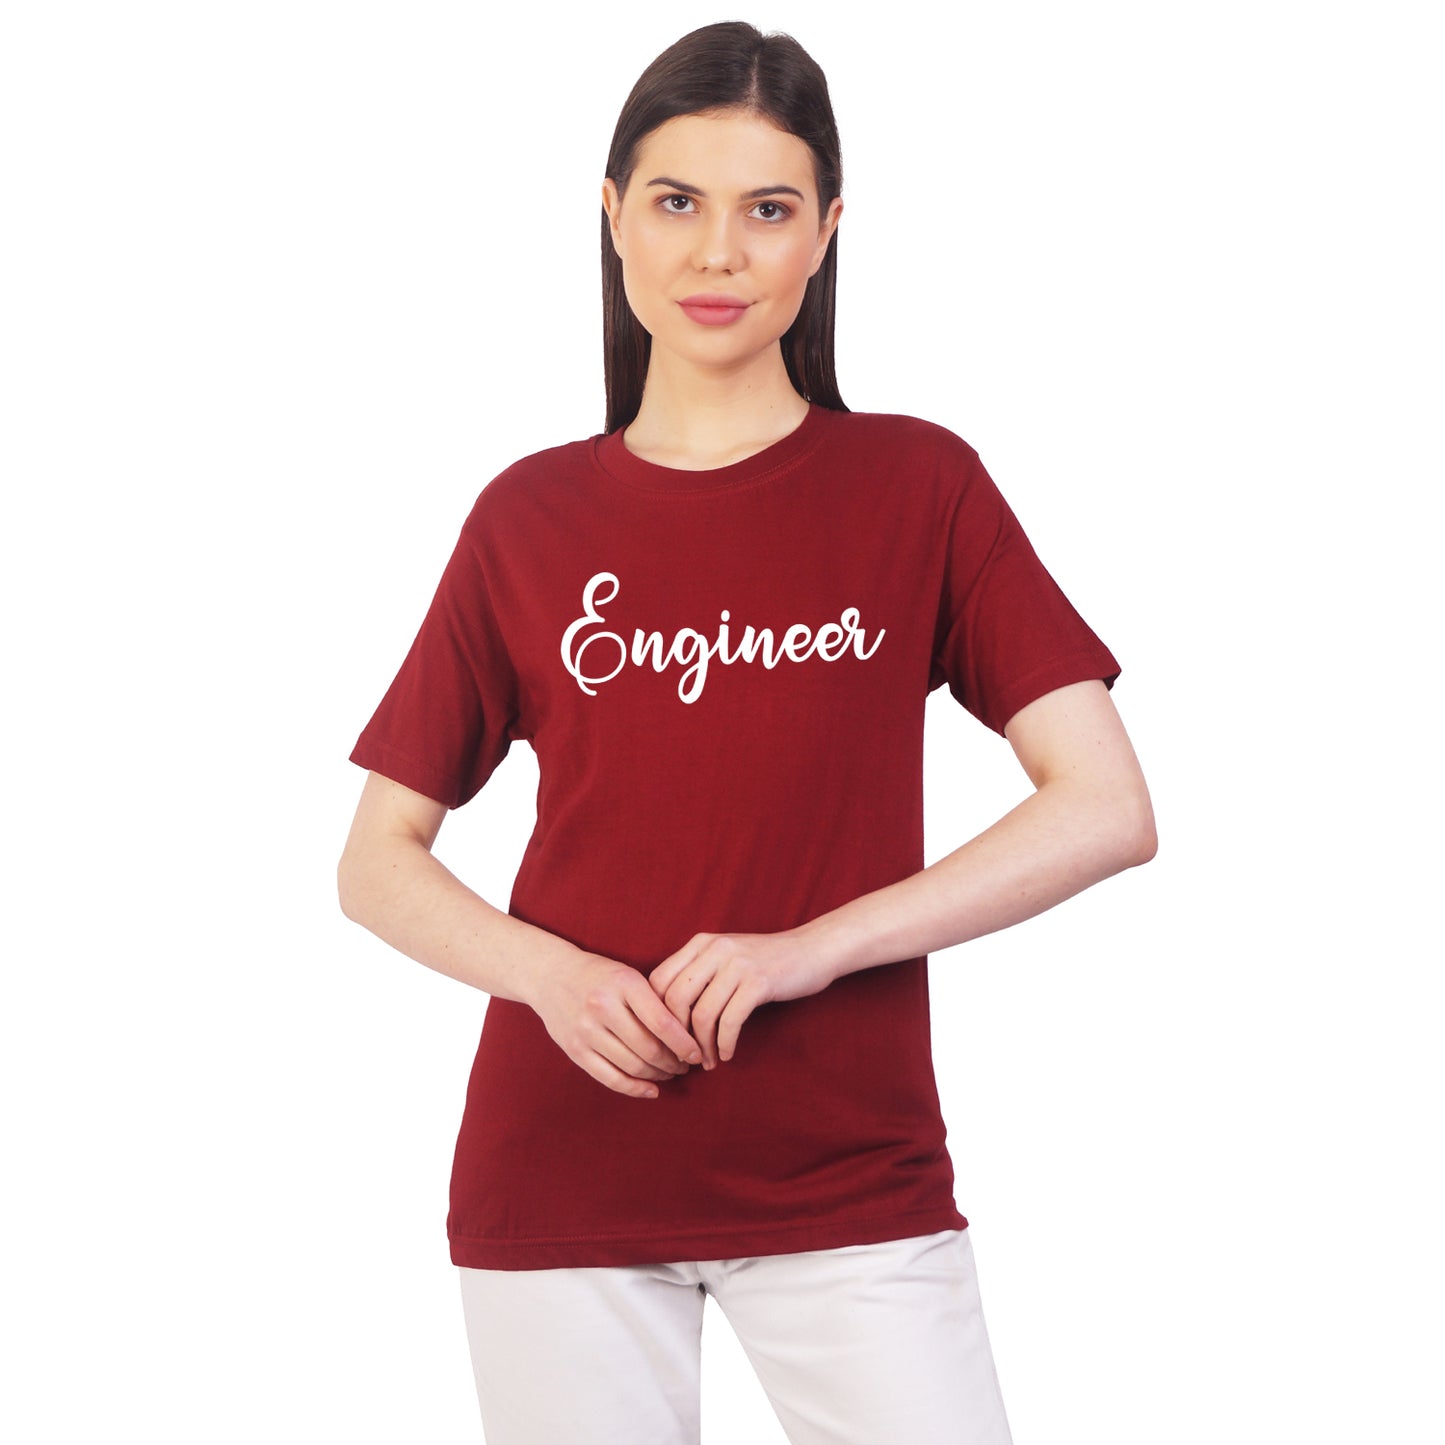 Engineer cotton T-shirt | T010